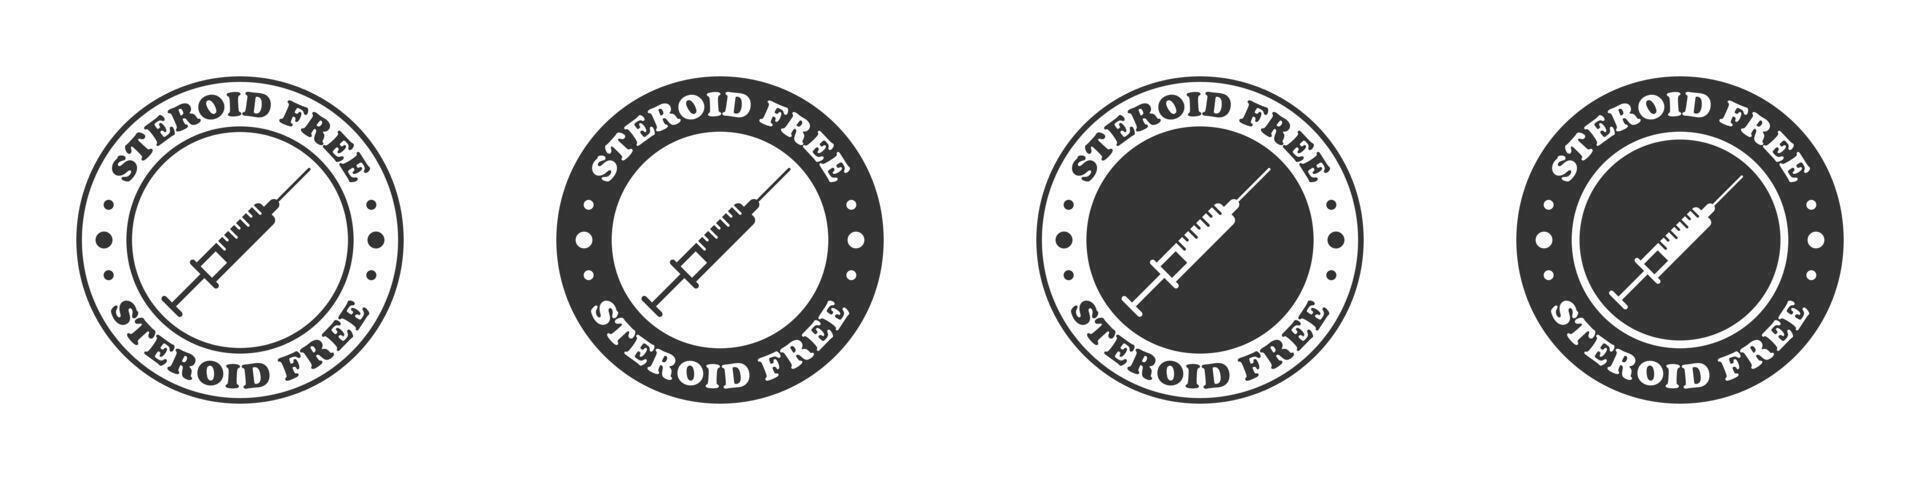 Steroid free icon set. Vector illustration.